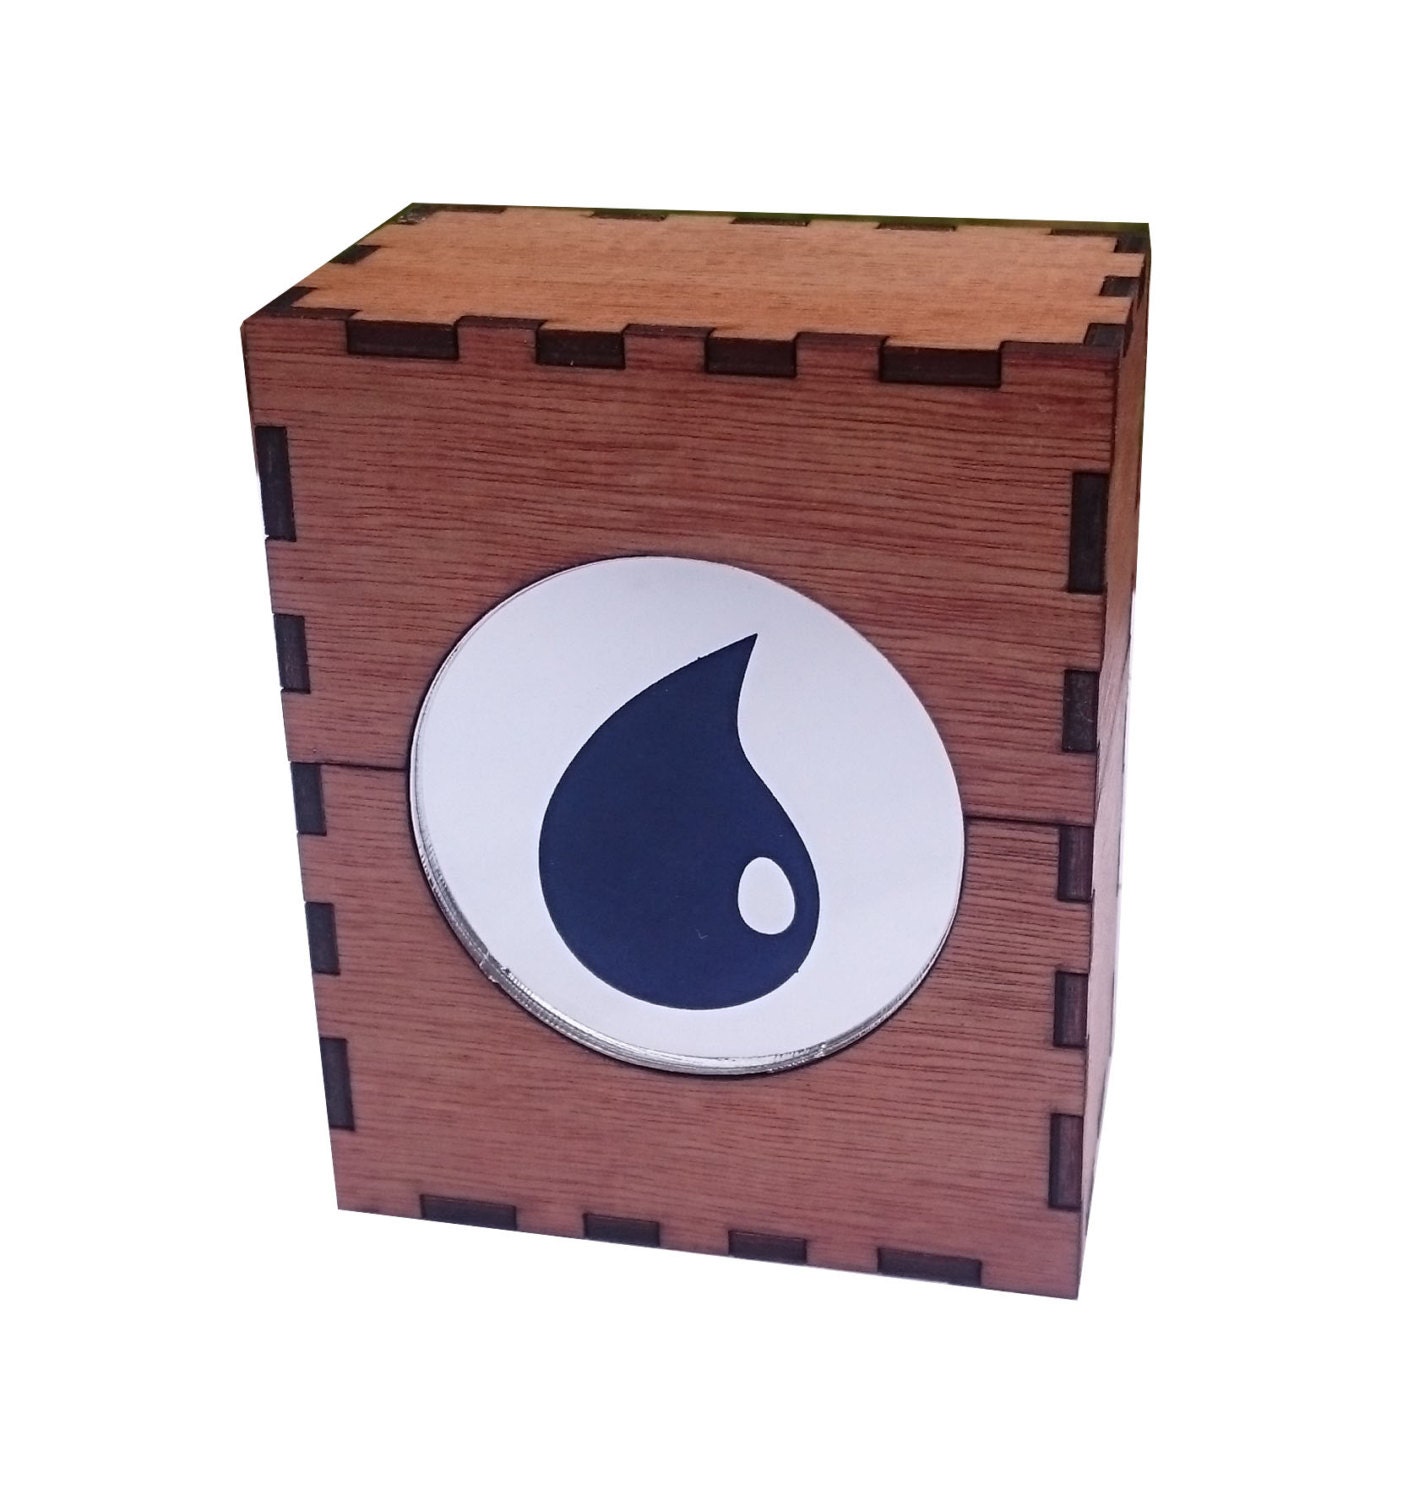 MTG deck box with mirrored acrylic mana symbol by